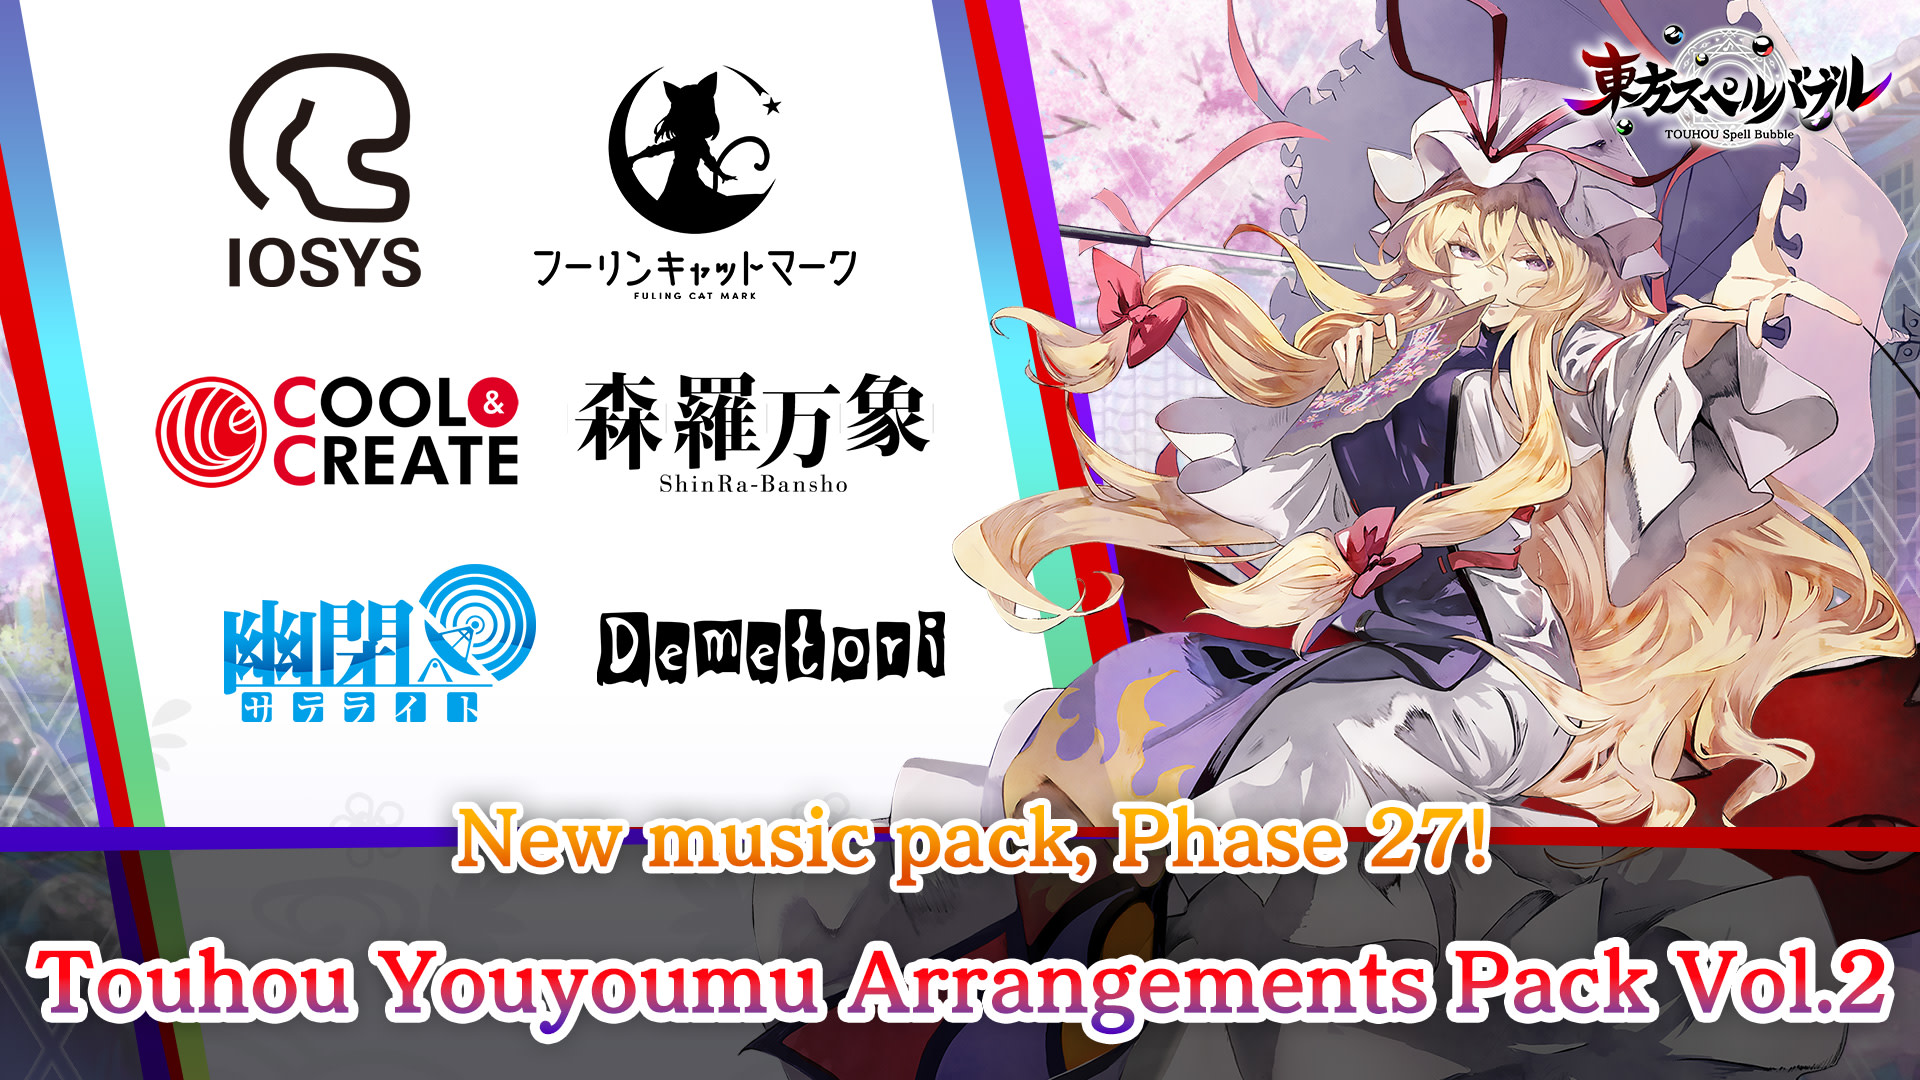 Touhou Youyoumu Arrangements Pack Vol.2